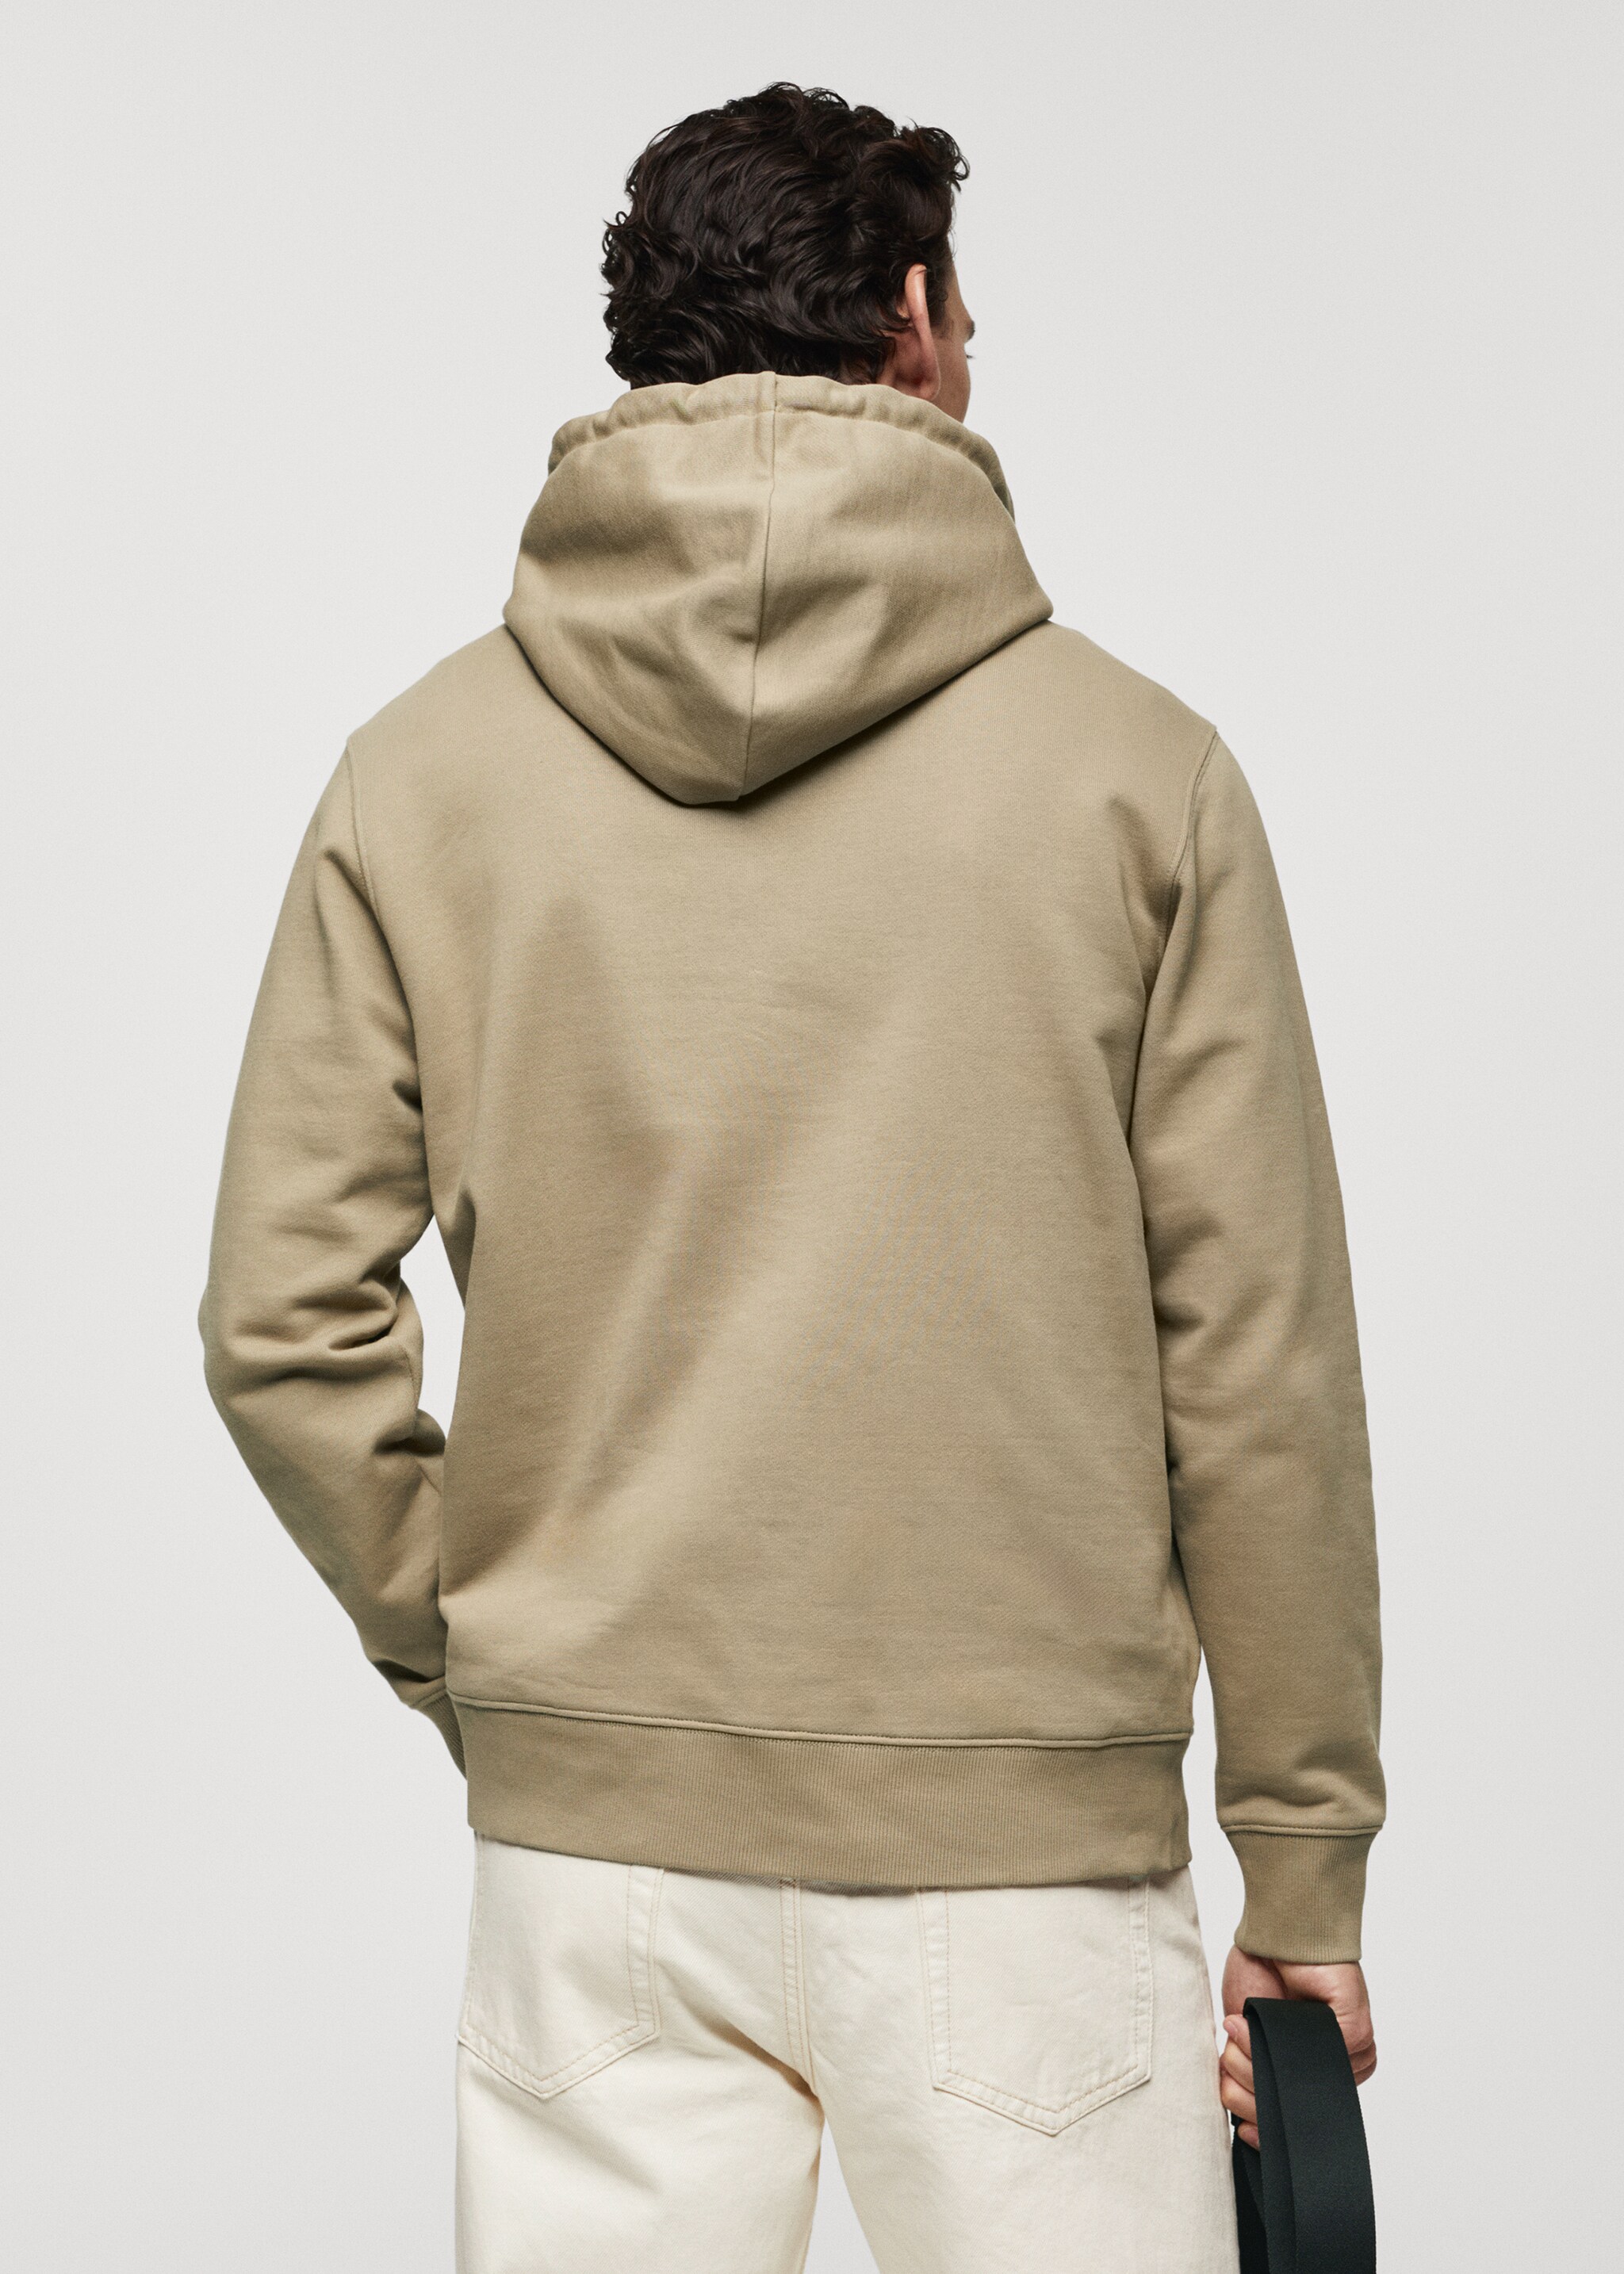 Lightweight cotton hooded sweatshirt - Reverse of the article